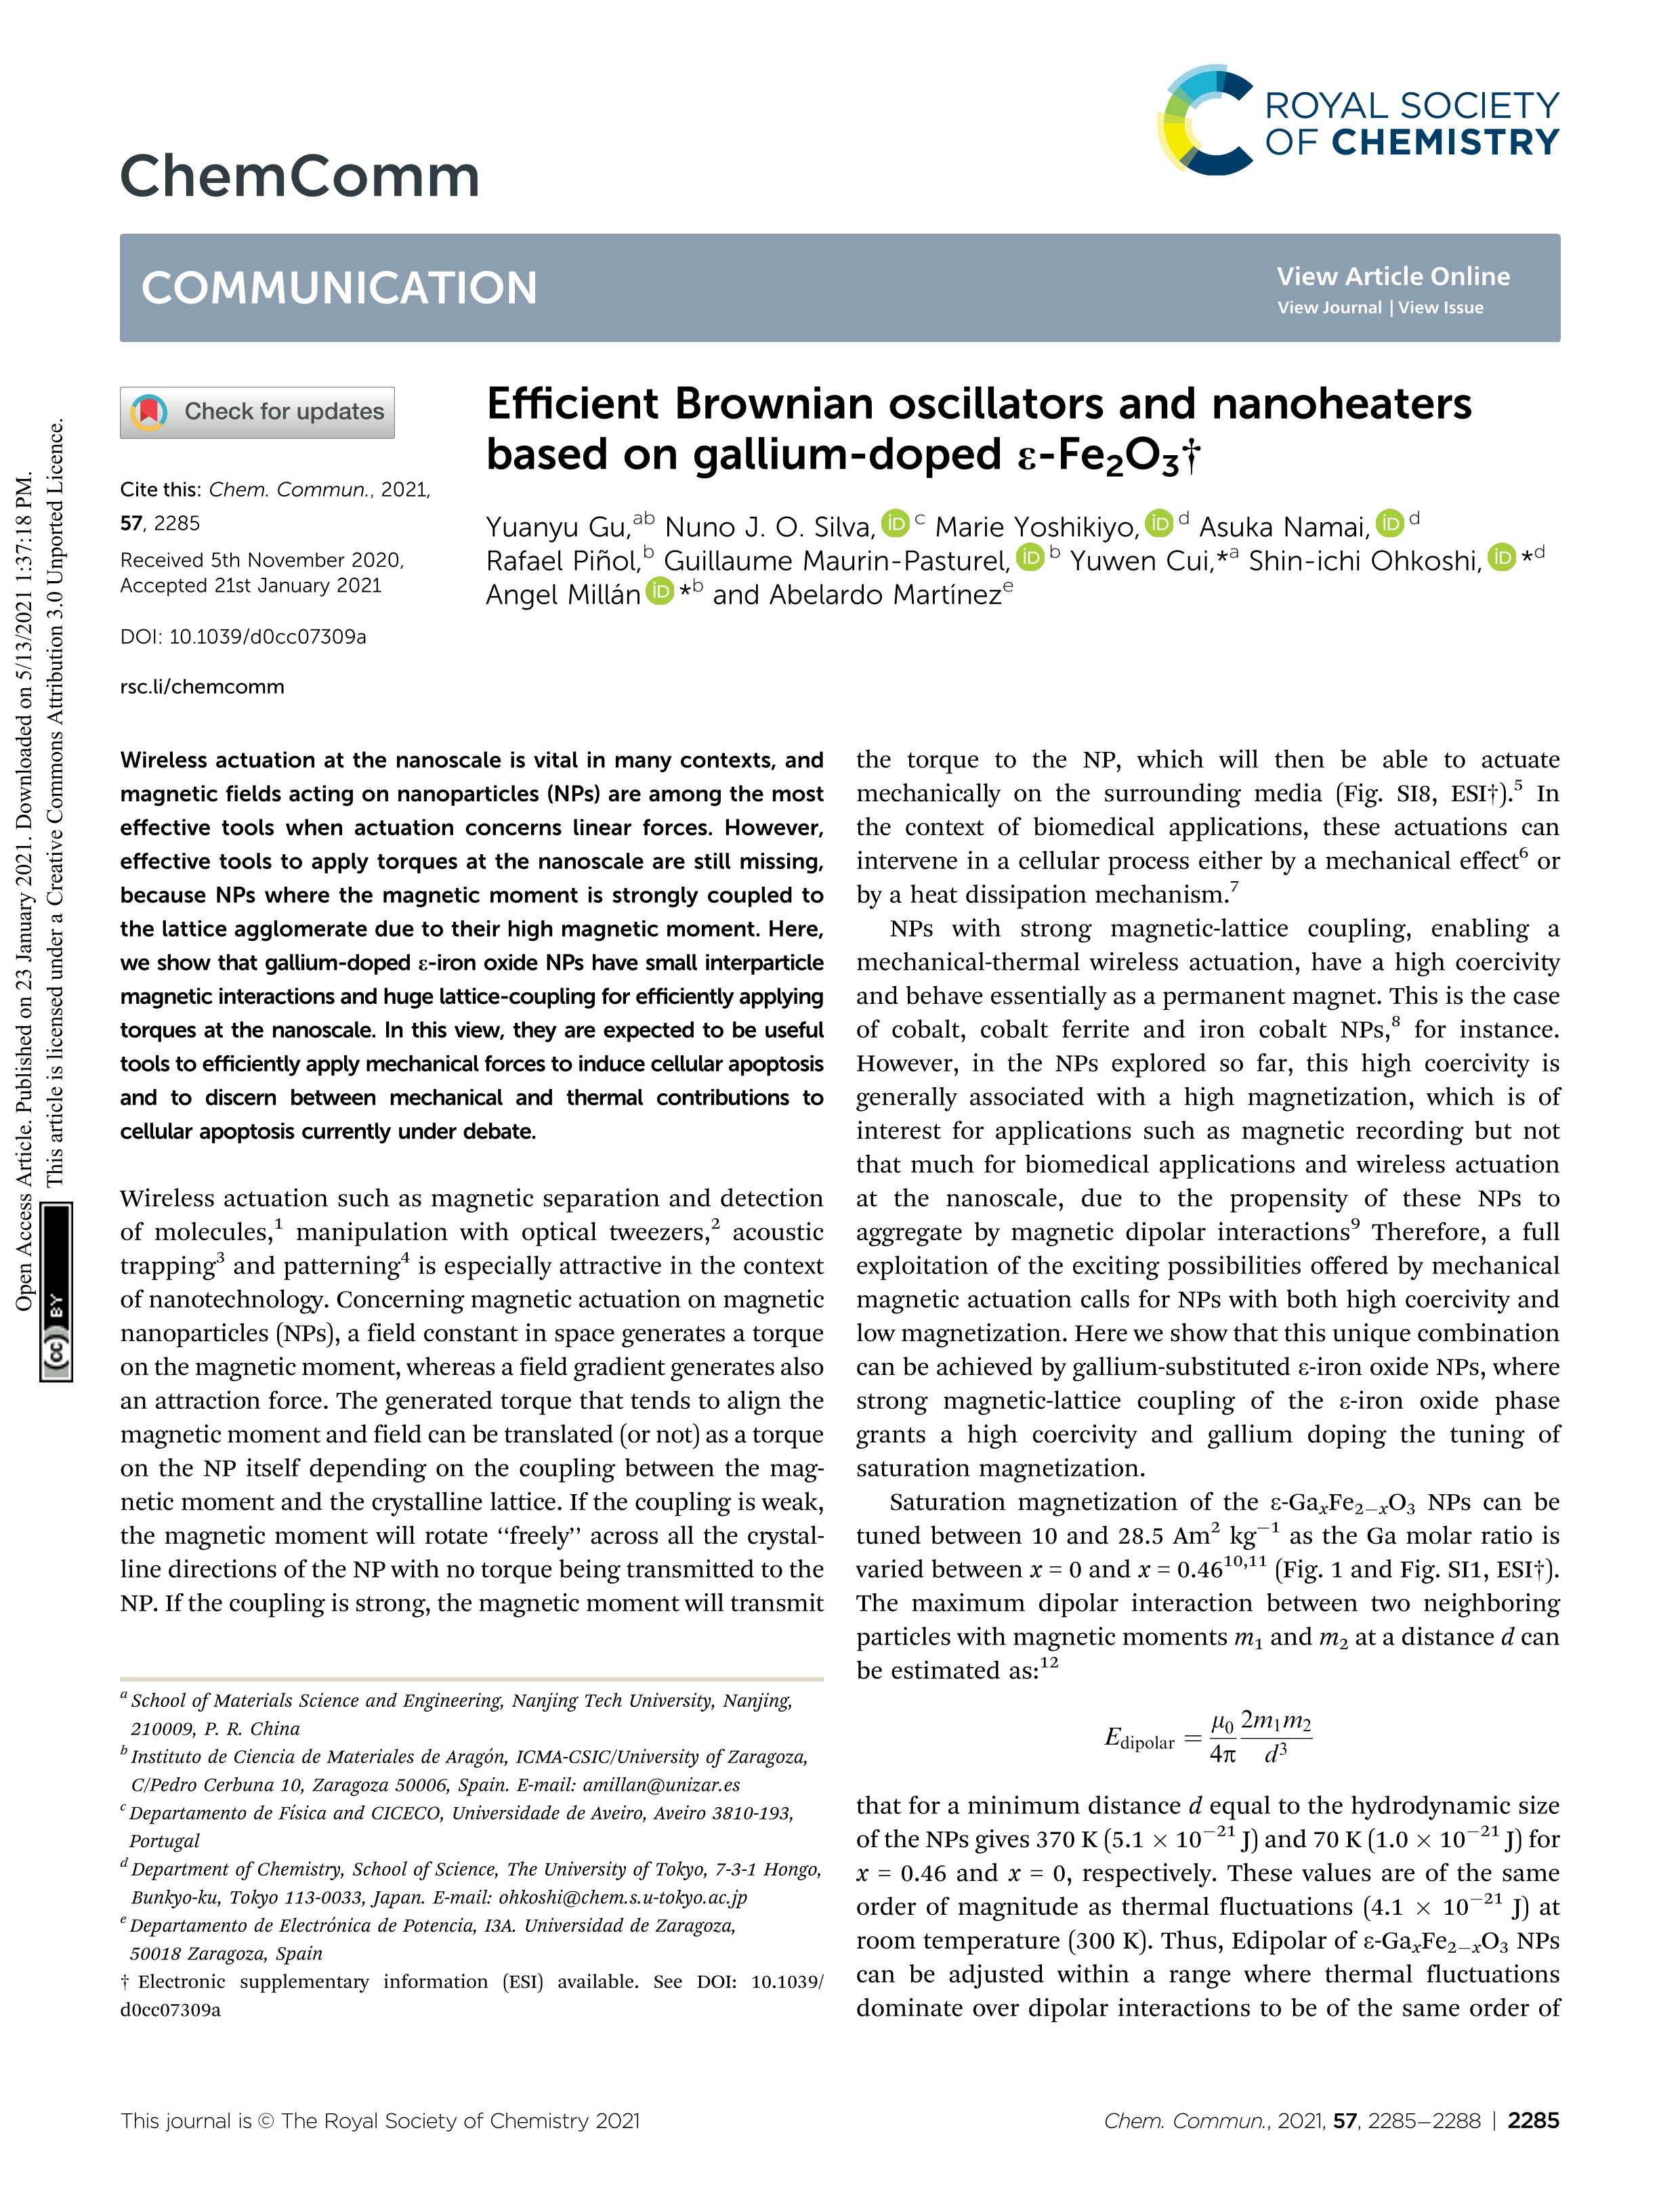 Efficient Brownian oscillators and nanoheaters based on gallium-doped e-Fe2O3